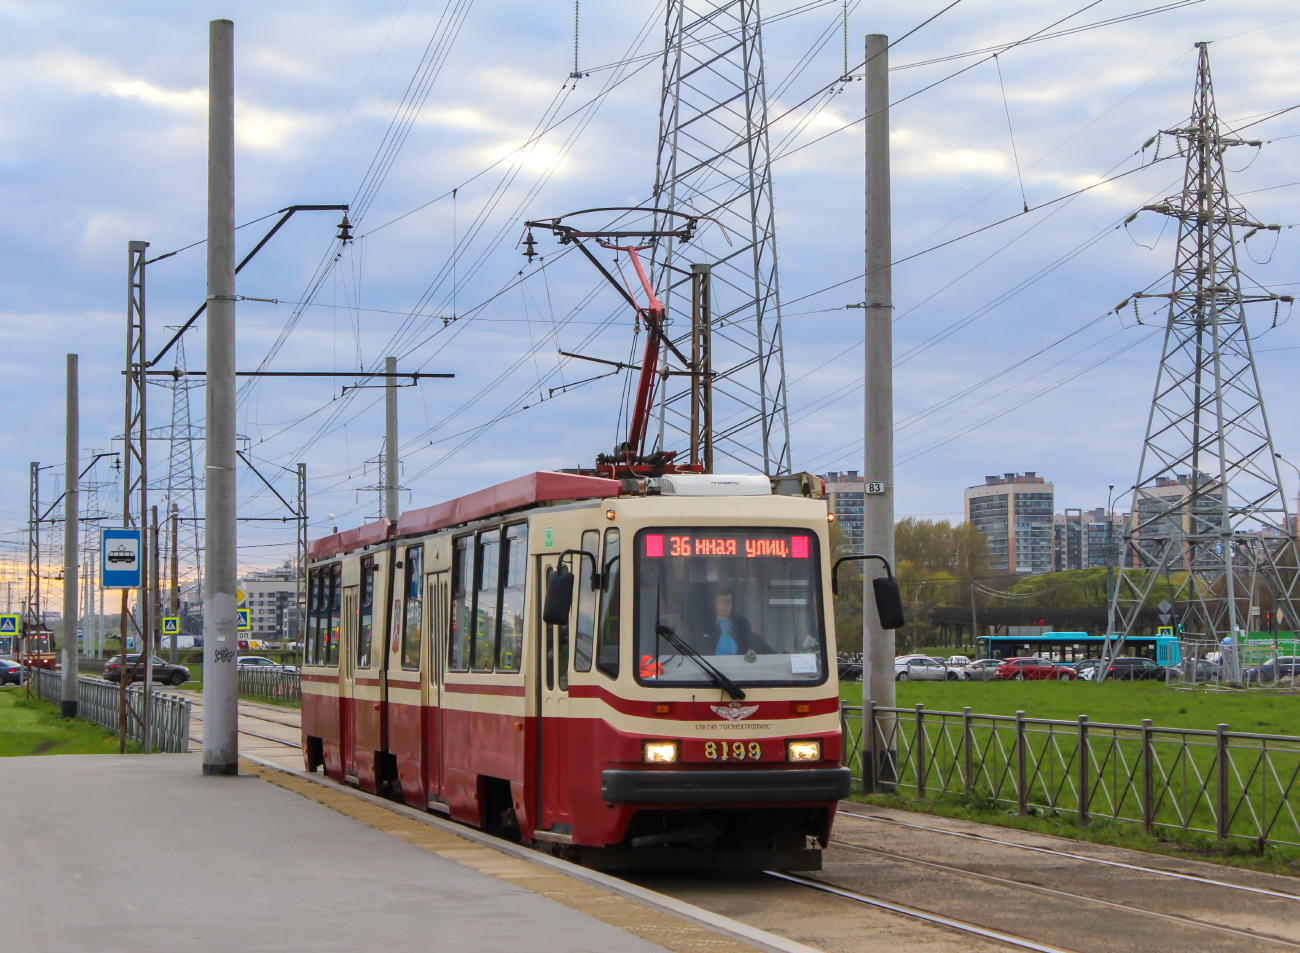 Троллейбус 29 спб. Трамвай ЛВС 86м2 8199. ЛВС 86 2200. Трамвай Санкт-Петербург 2002. ЛВС-86 трамвай.